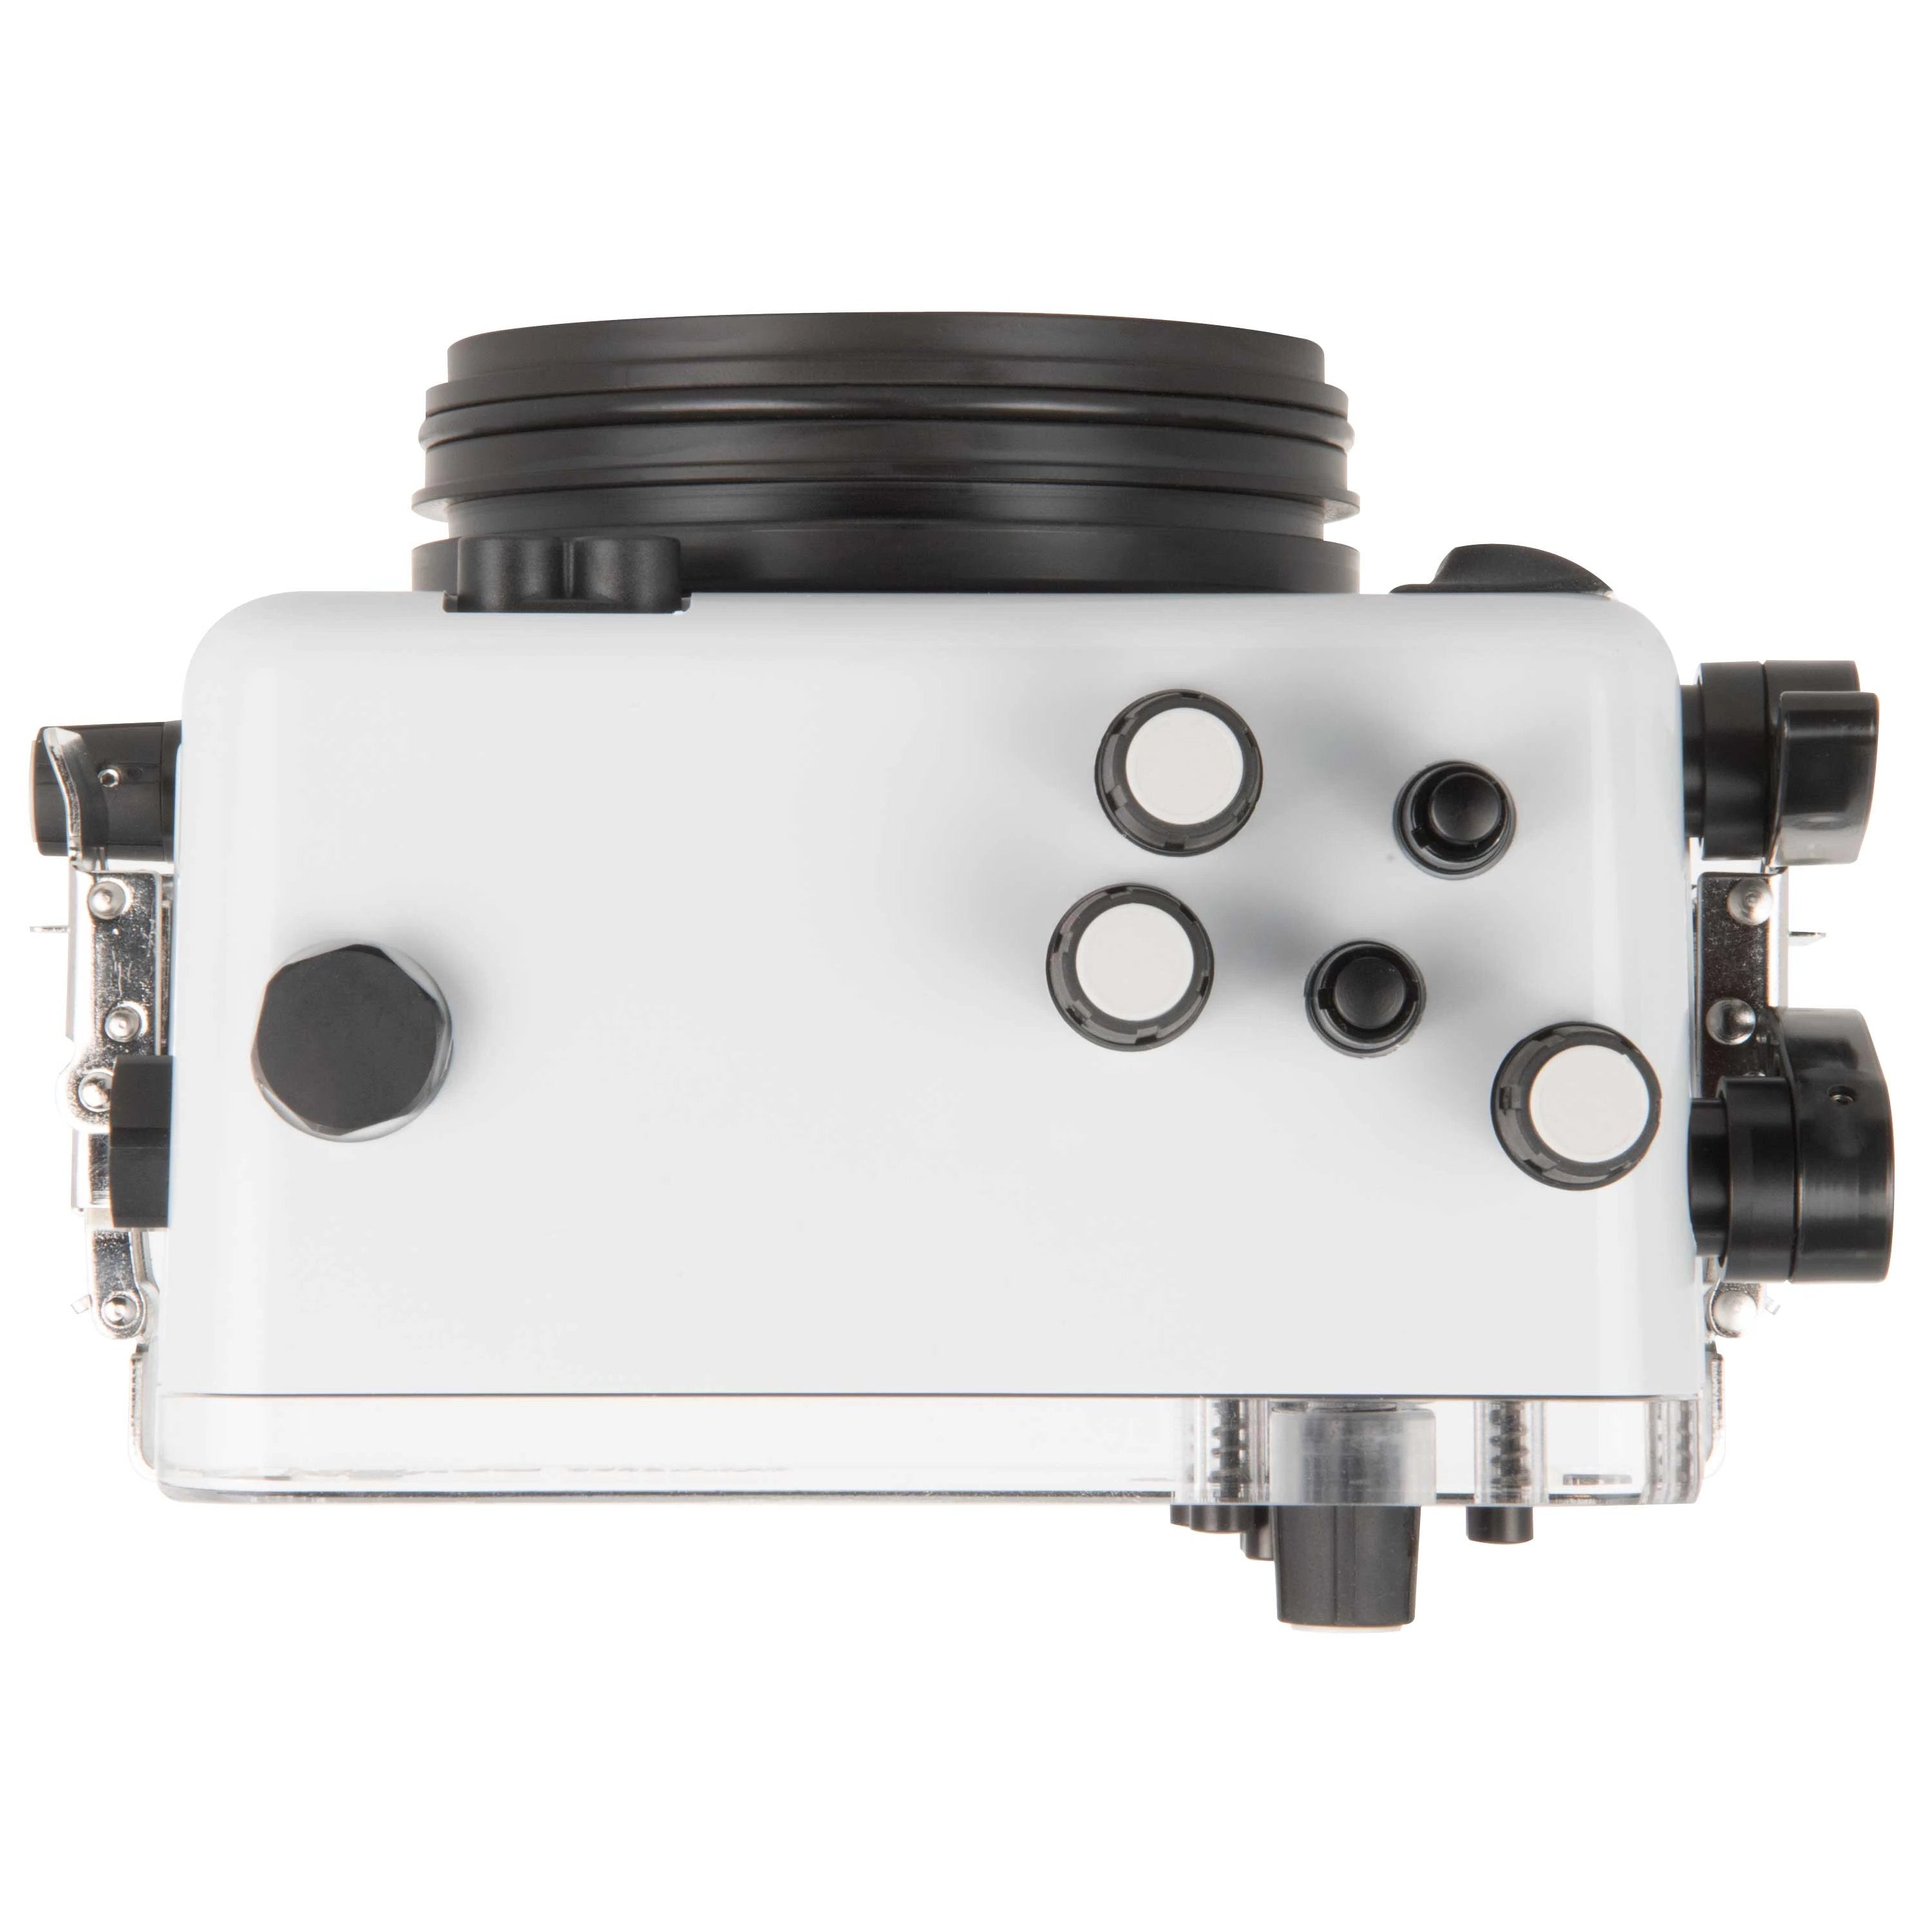 Ikelite Underwater Housing for Canon EOS M6 Mark II Mirrorless Cameras